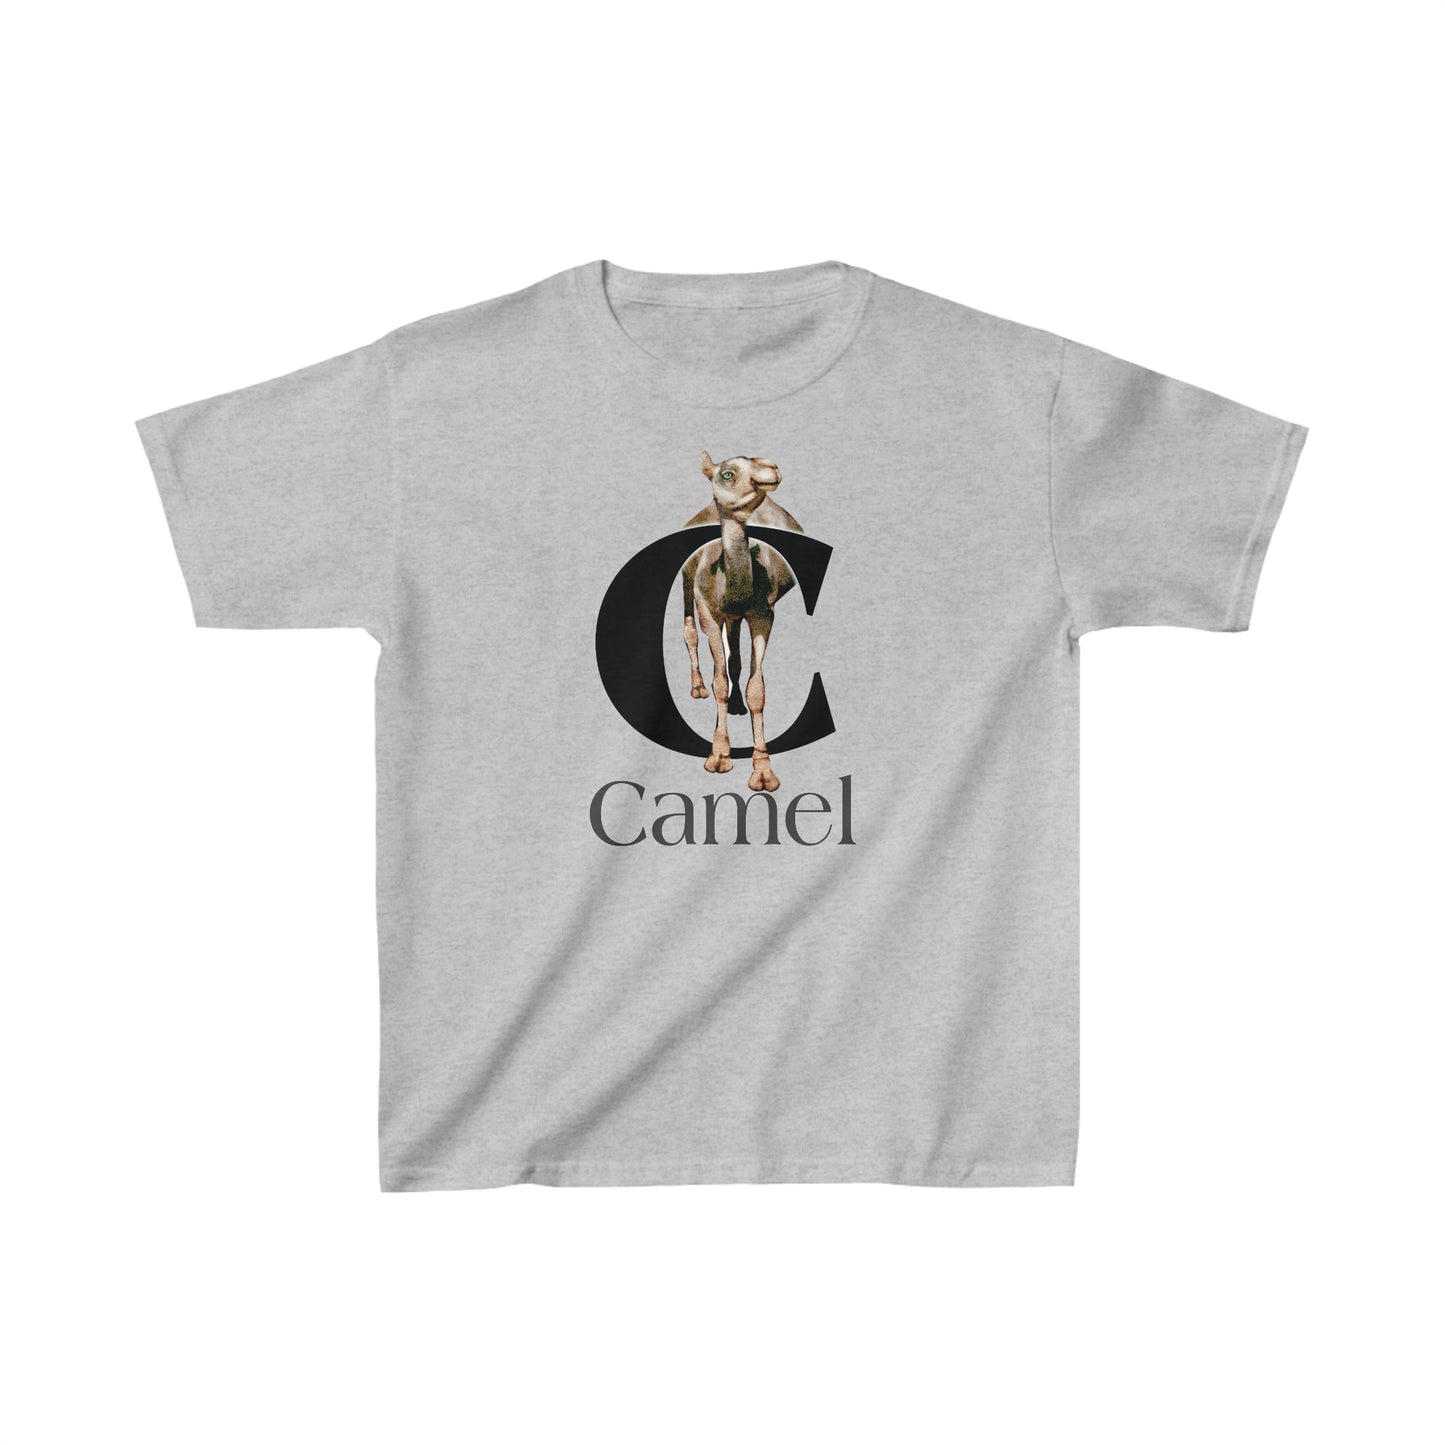 C is for Camel Youth t-shirt, Camel Drawing T-Shirt, Camel Illustration, Camel lover shirt, animal t-shirt, animal alphabet T, animal letters Tee